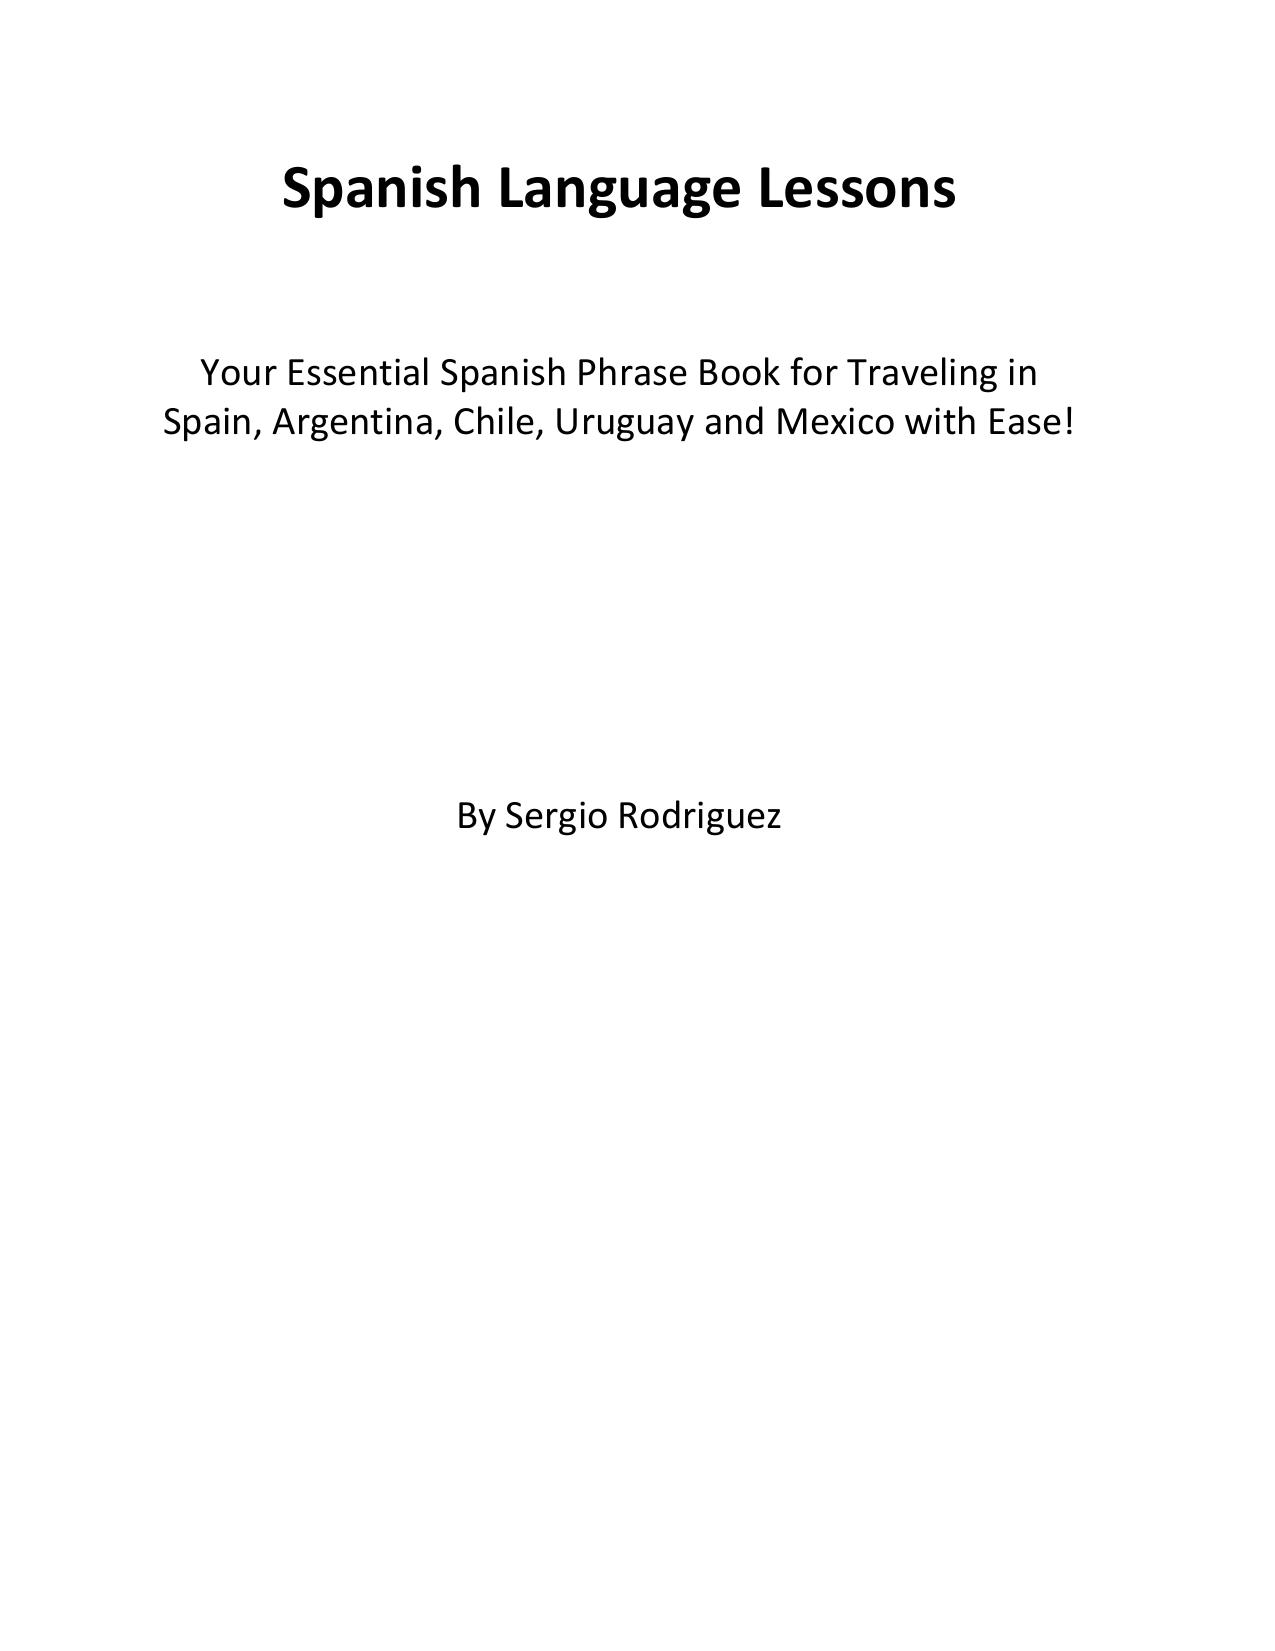 Spanish Language by Sergio Rodriguez